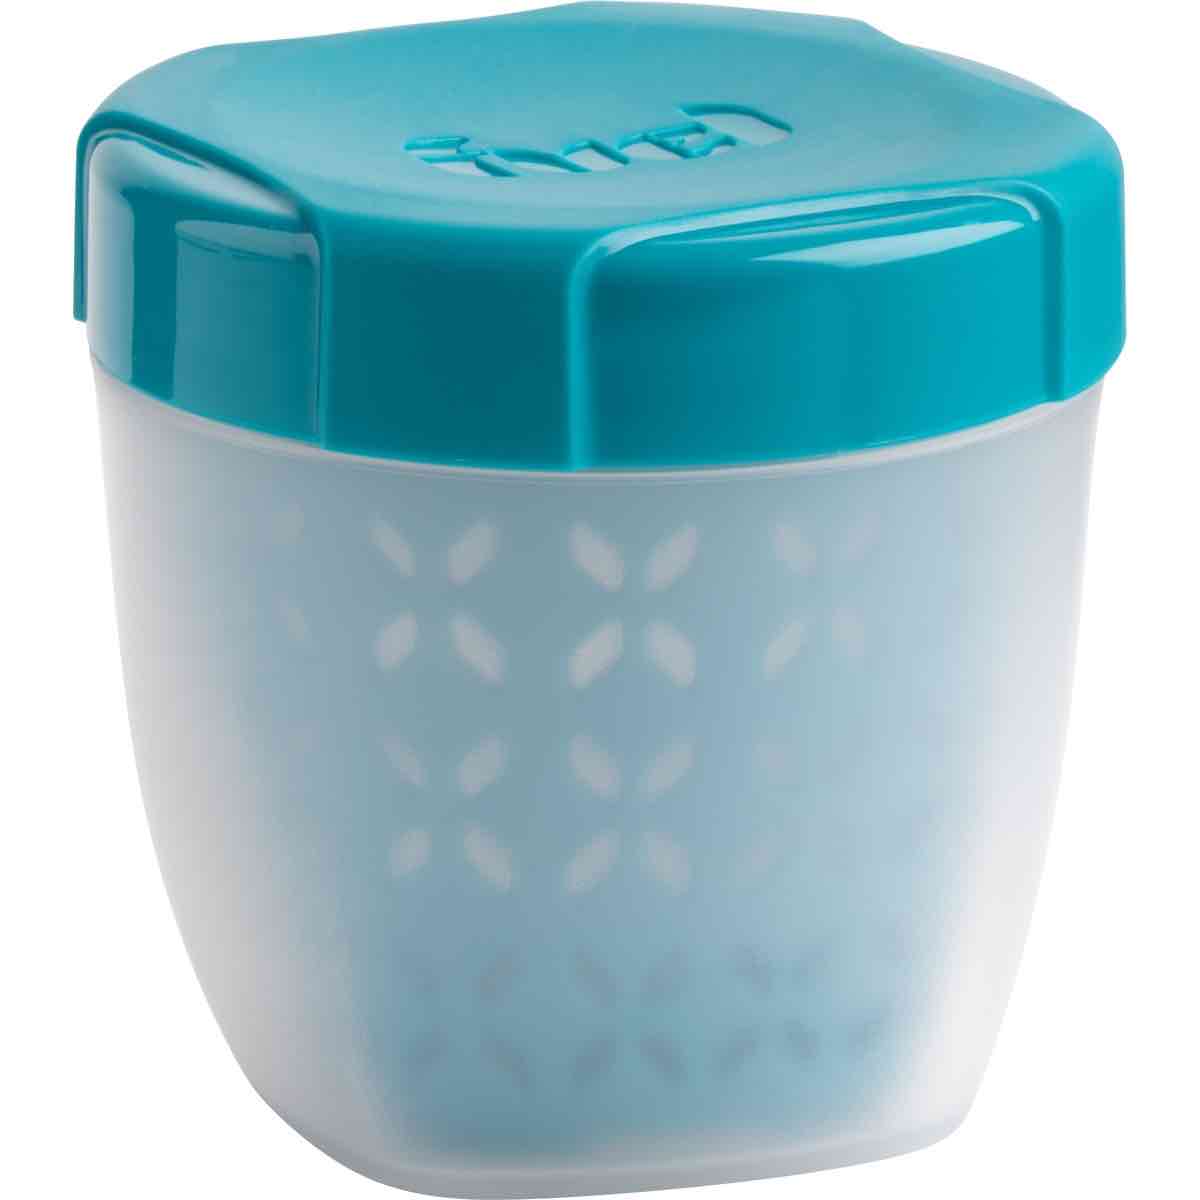 Yogurt & Granola Container W/Ice Lid-Blue 38909326